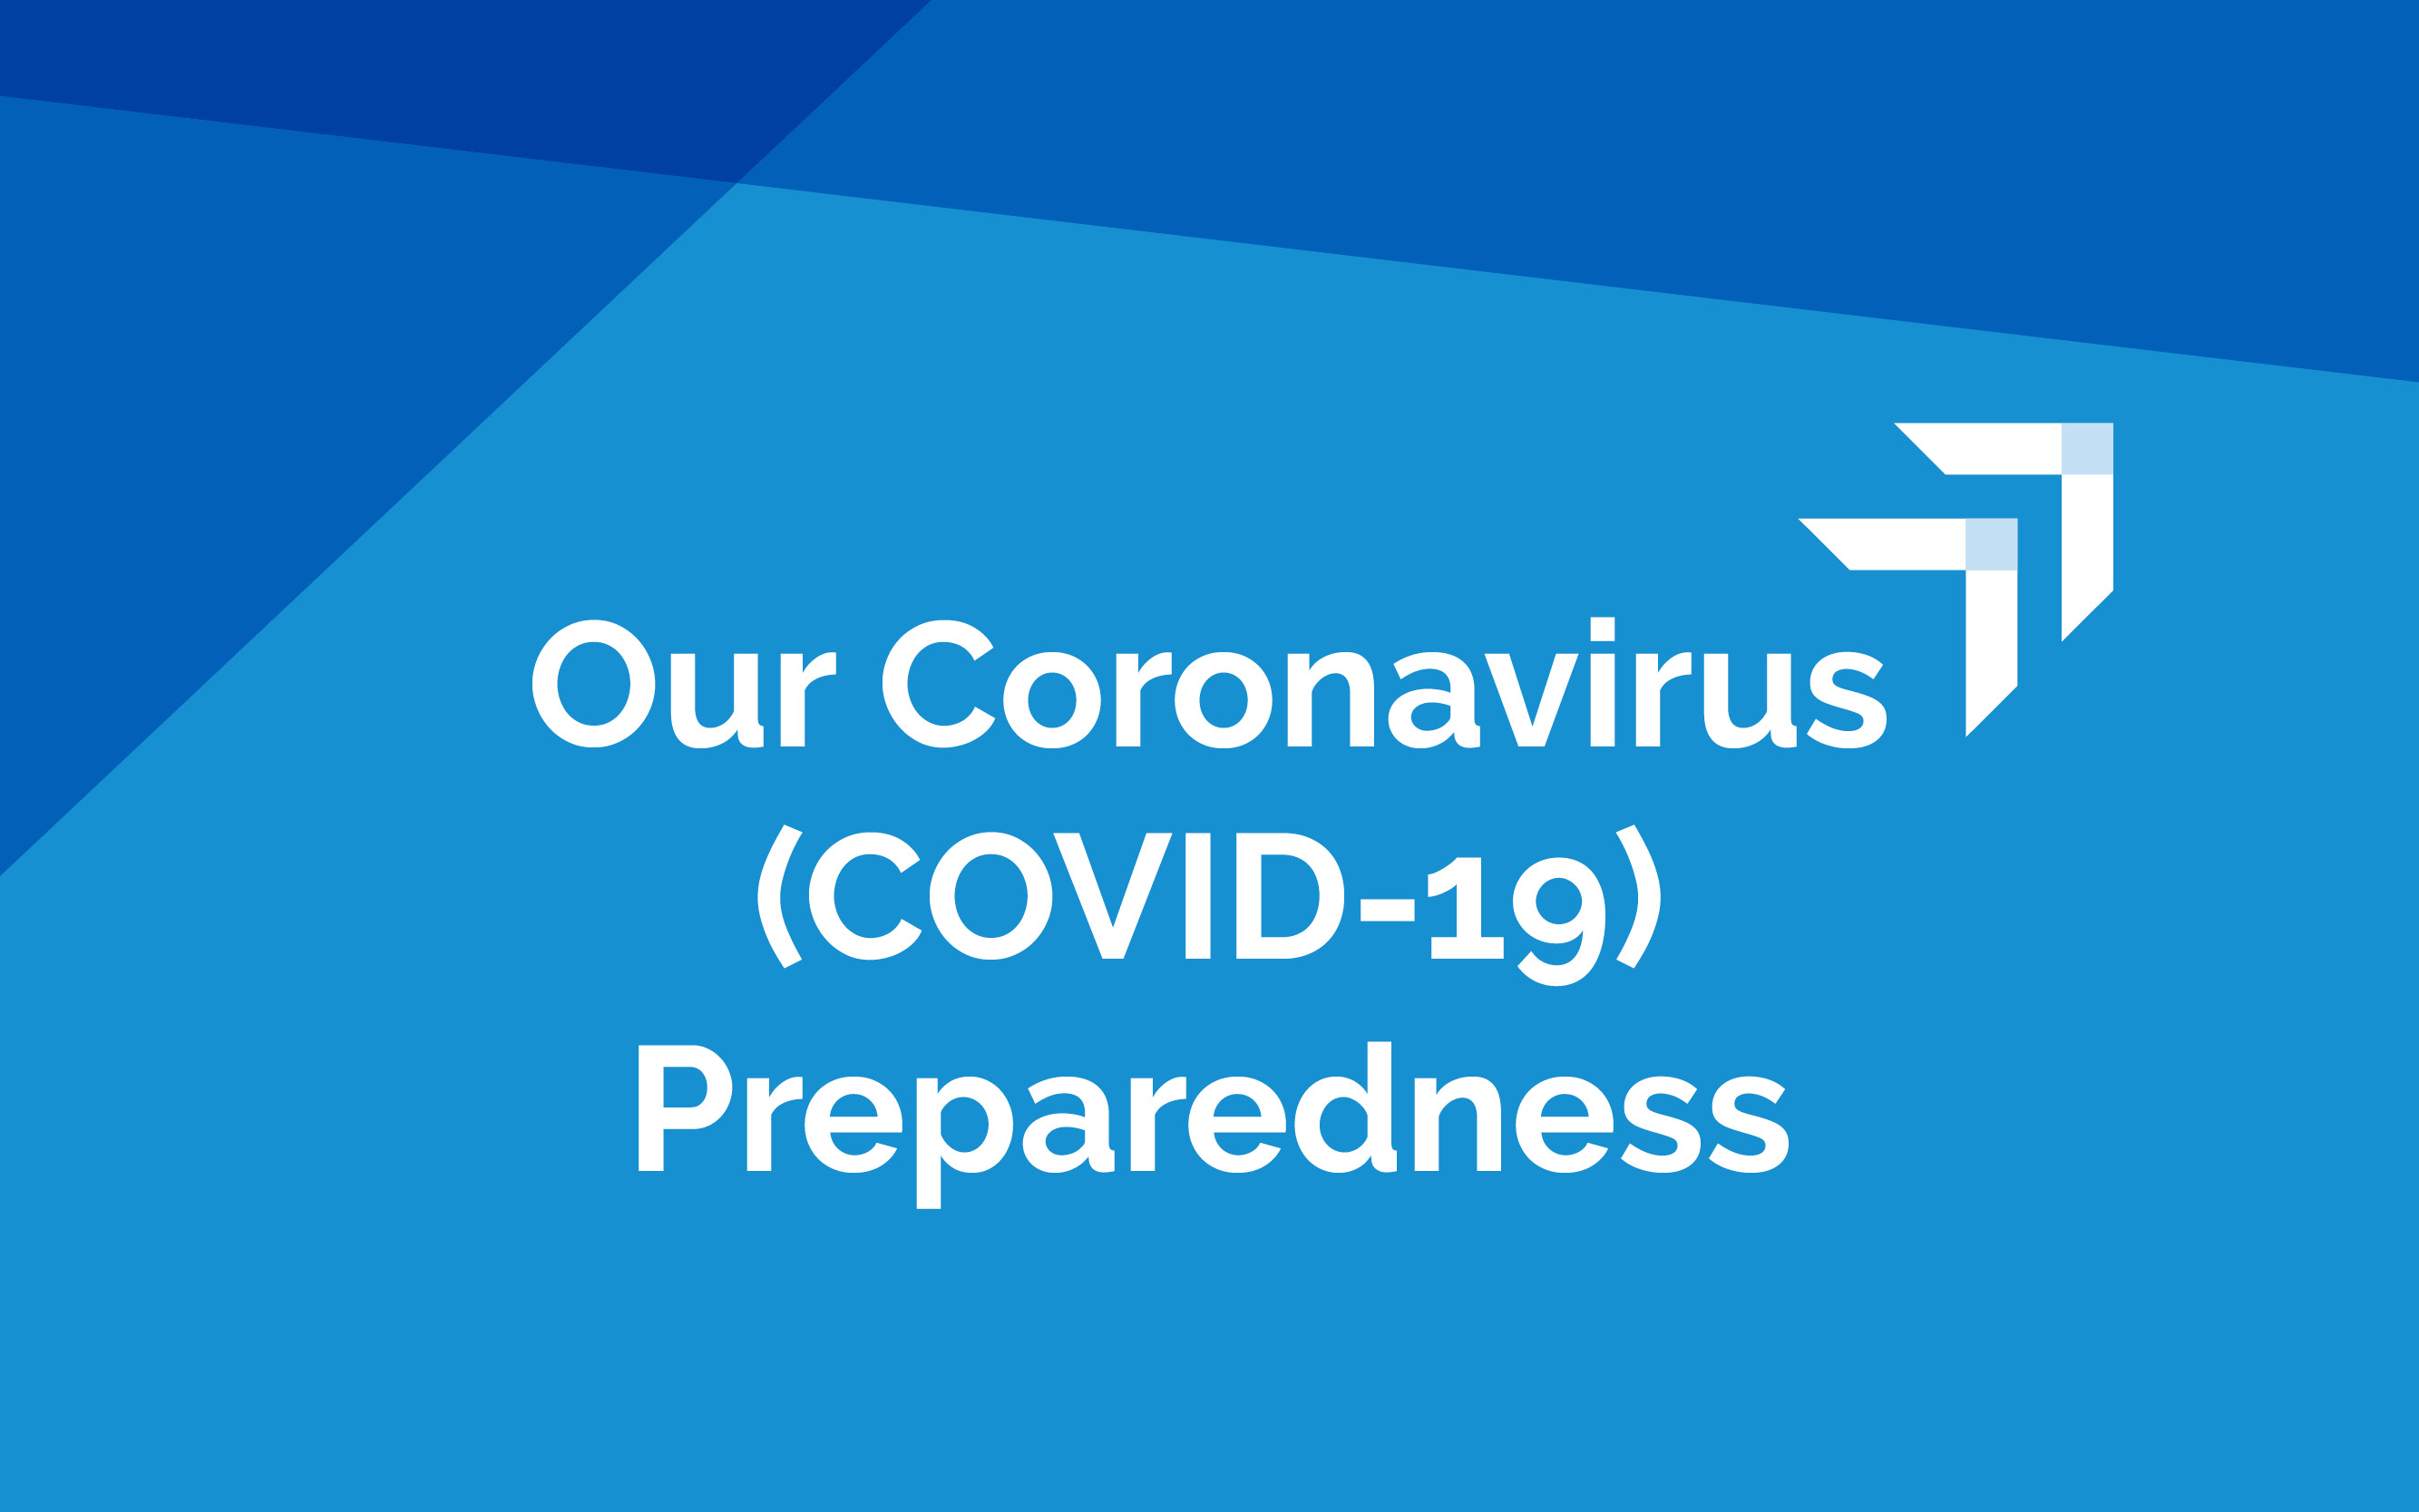 Our Coronavirus (COVID-19) Preparedness